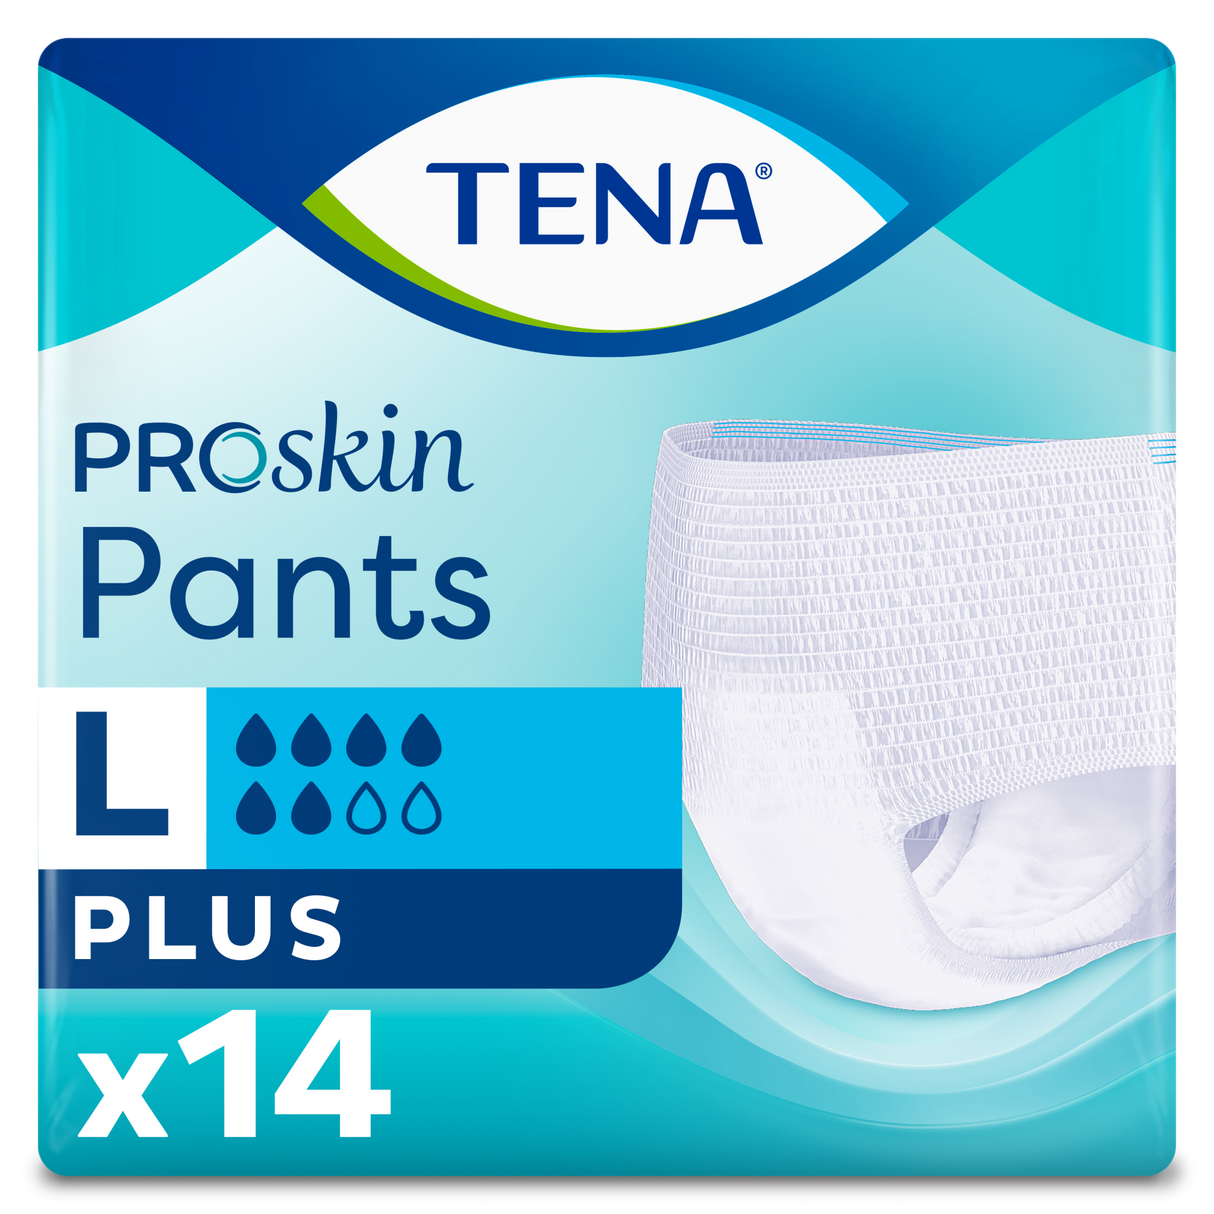 TENA Pants ProSkin Plus - sous vêtements absorbants